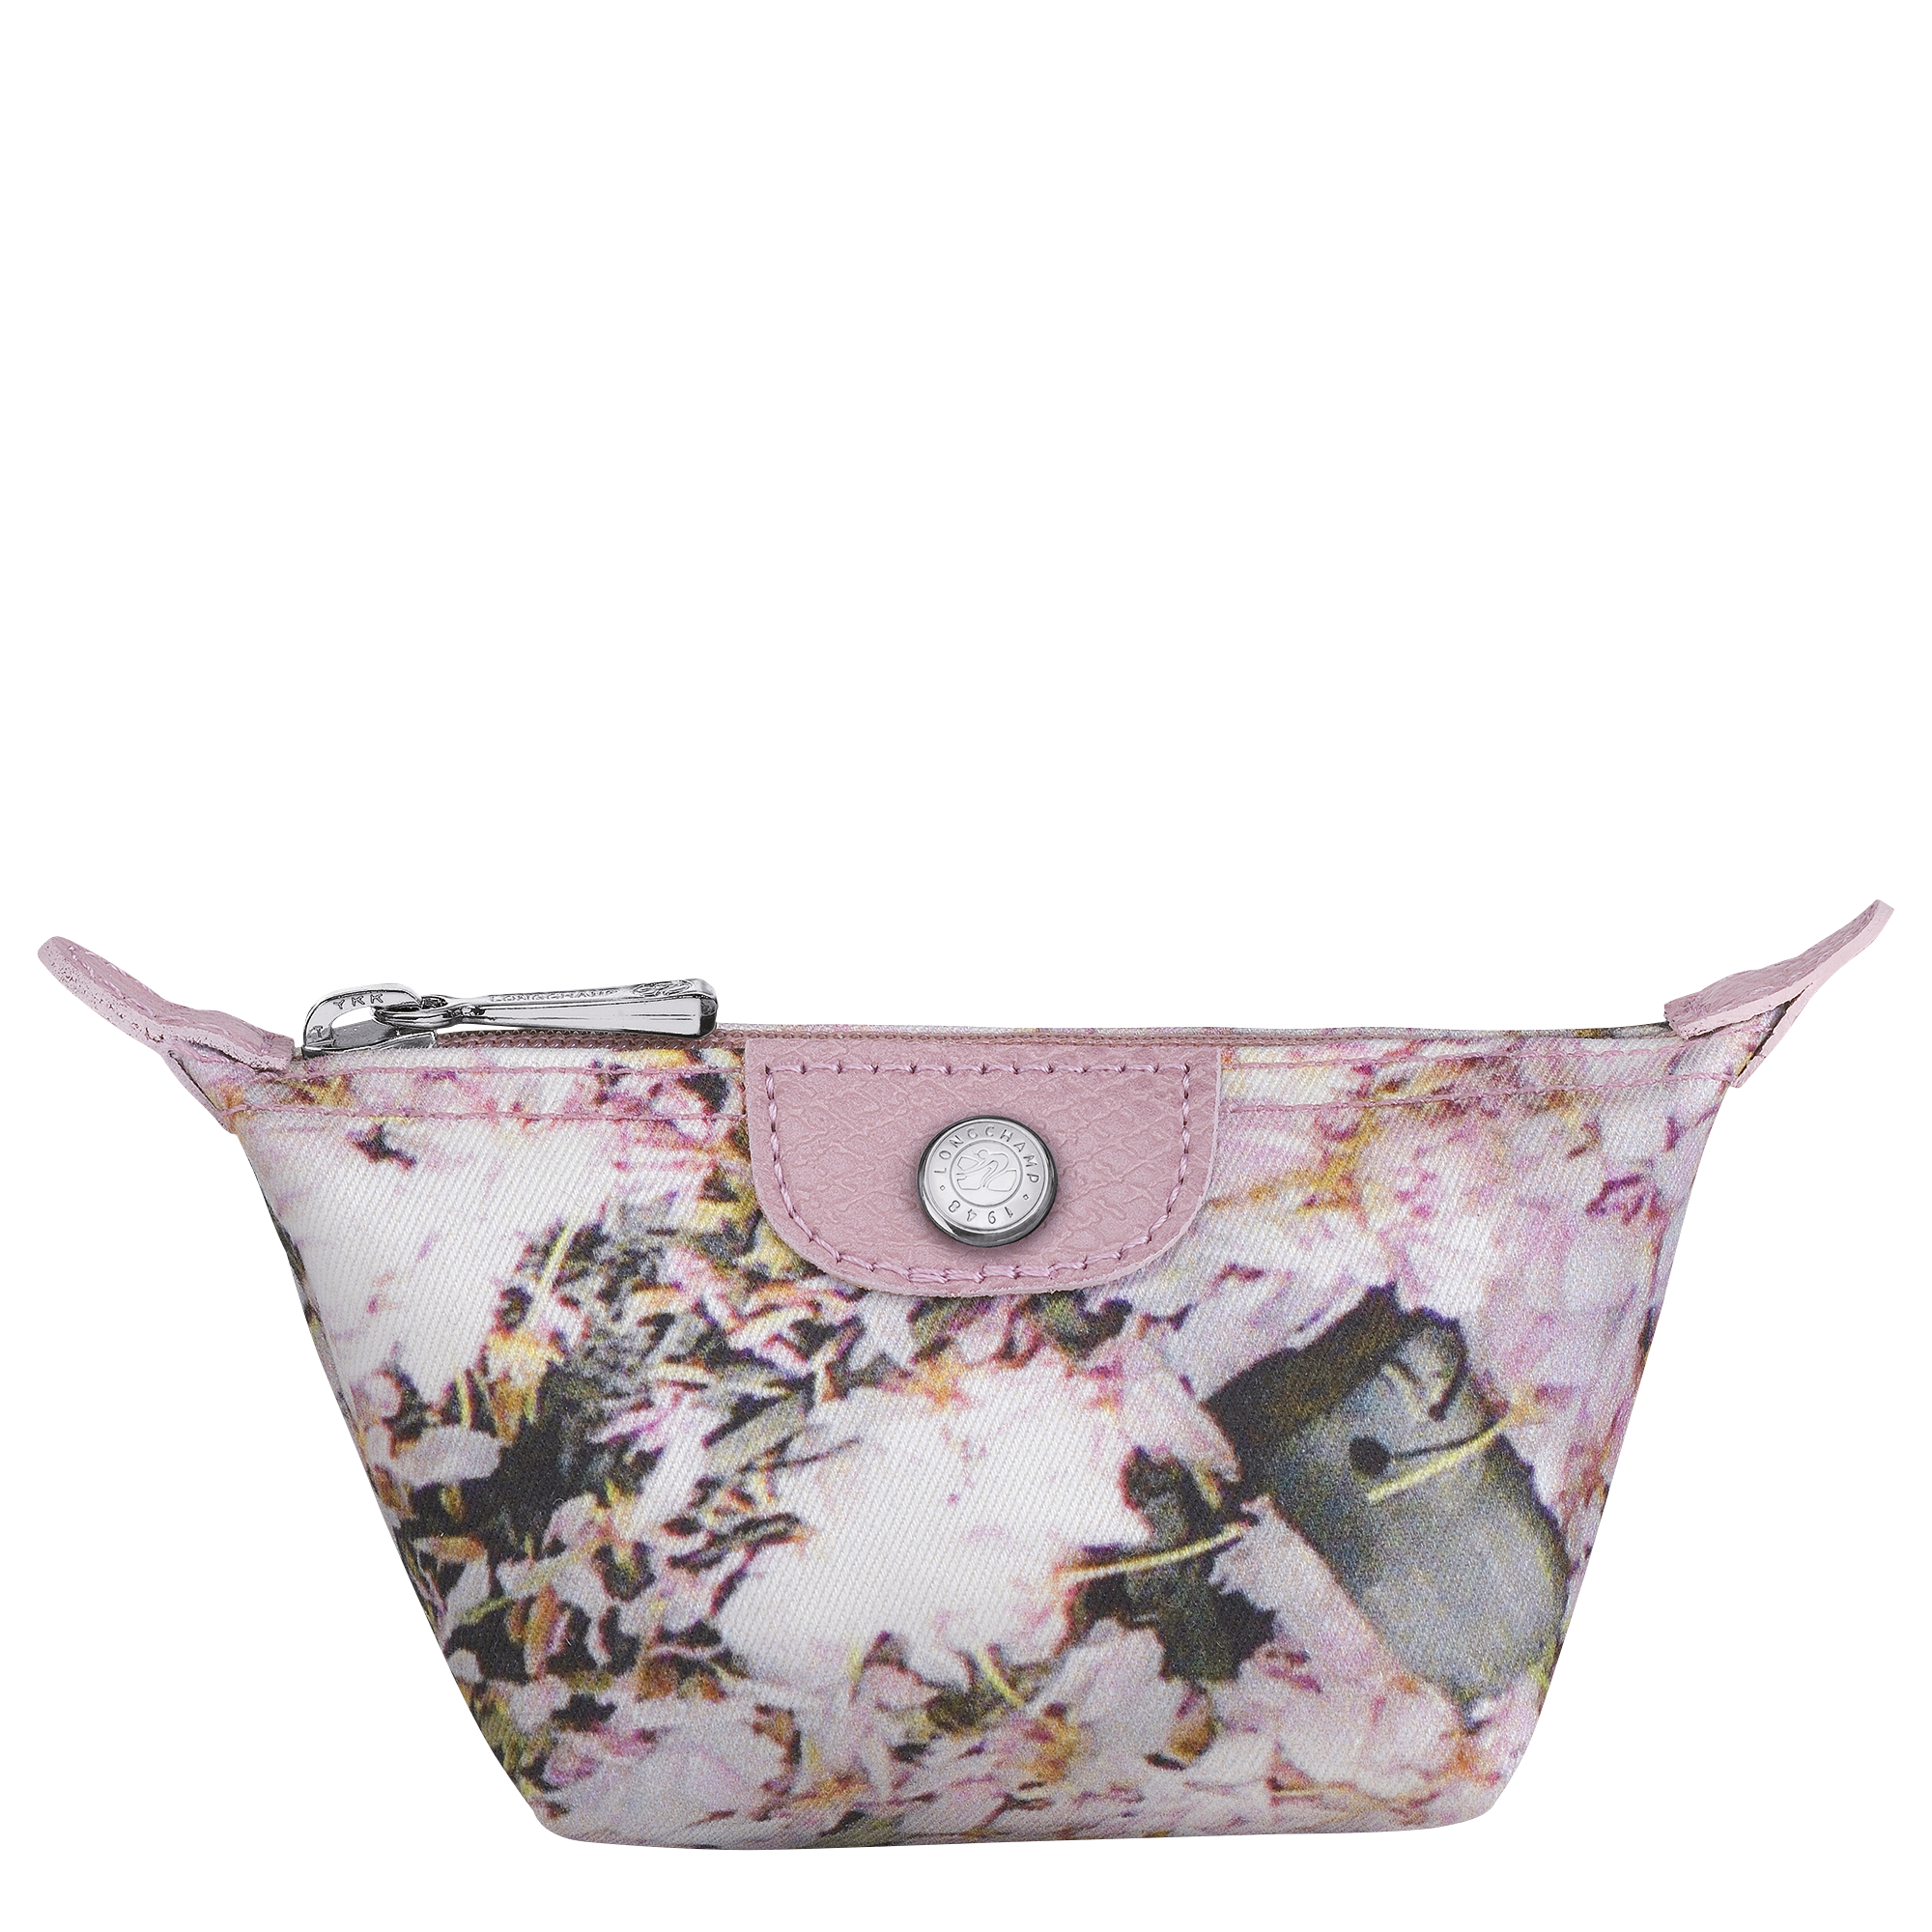 longchamp coin purse pink